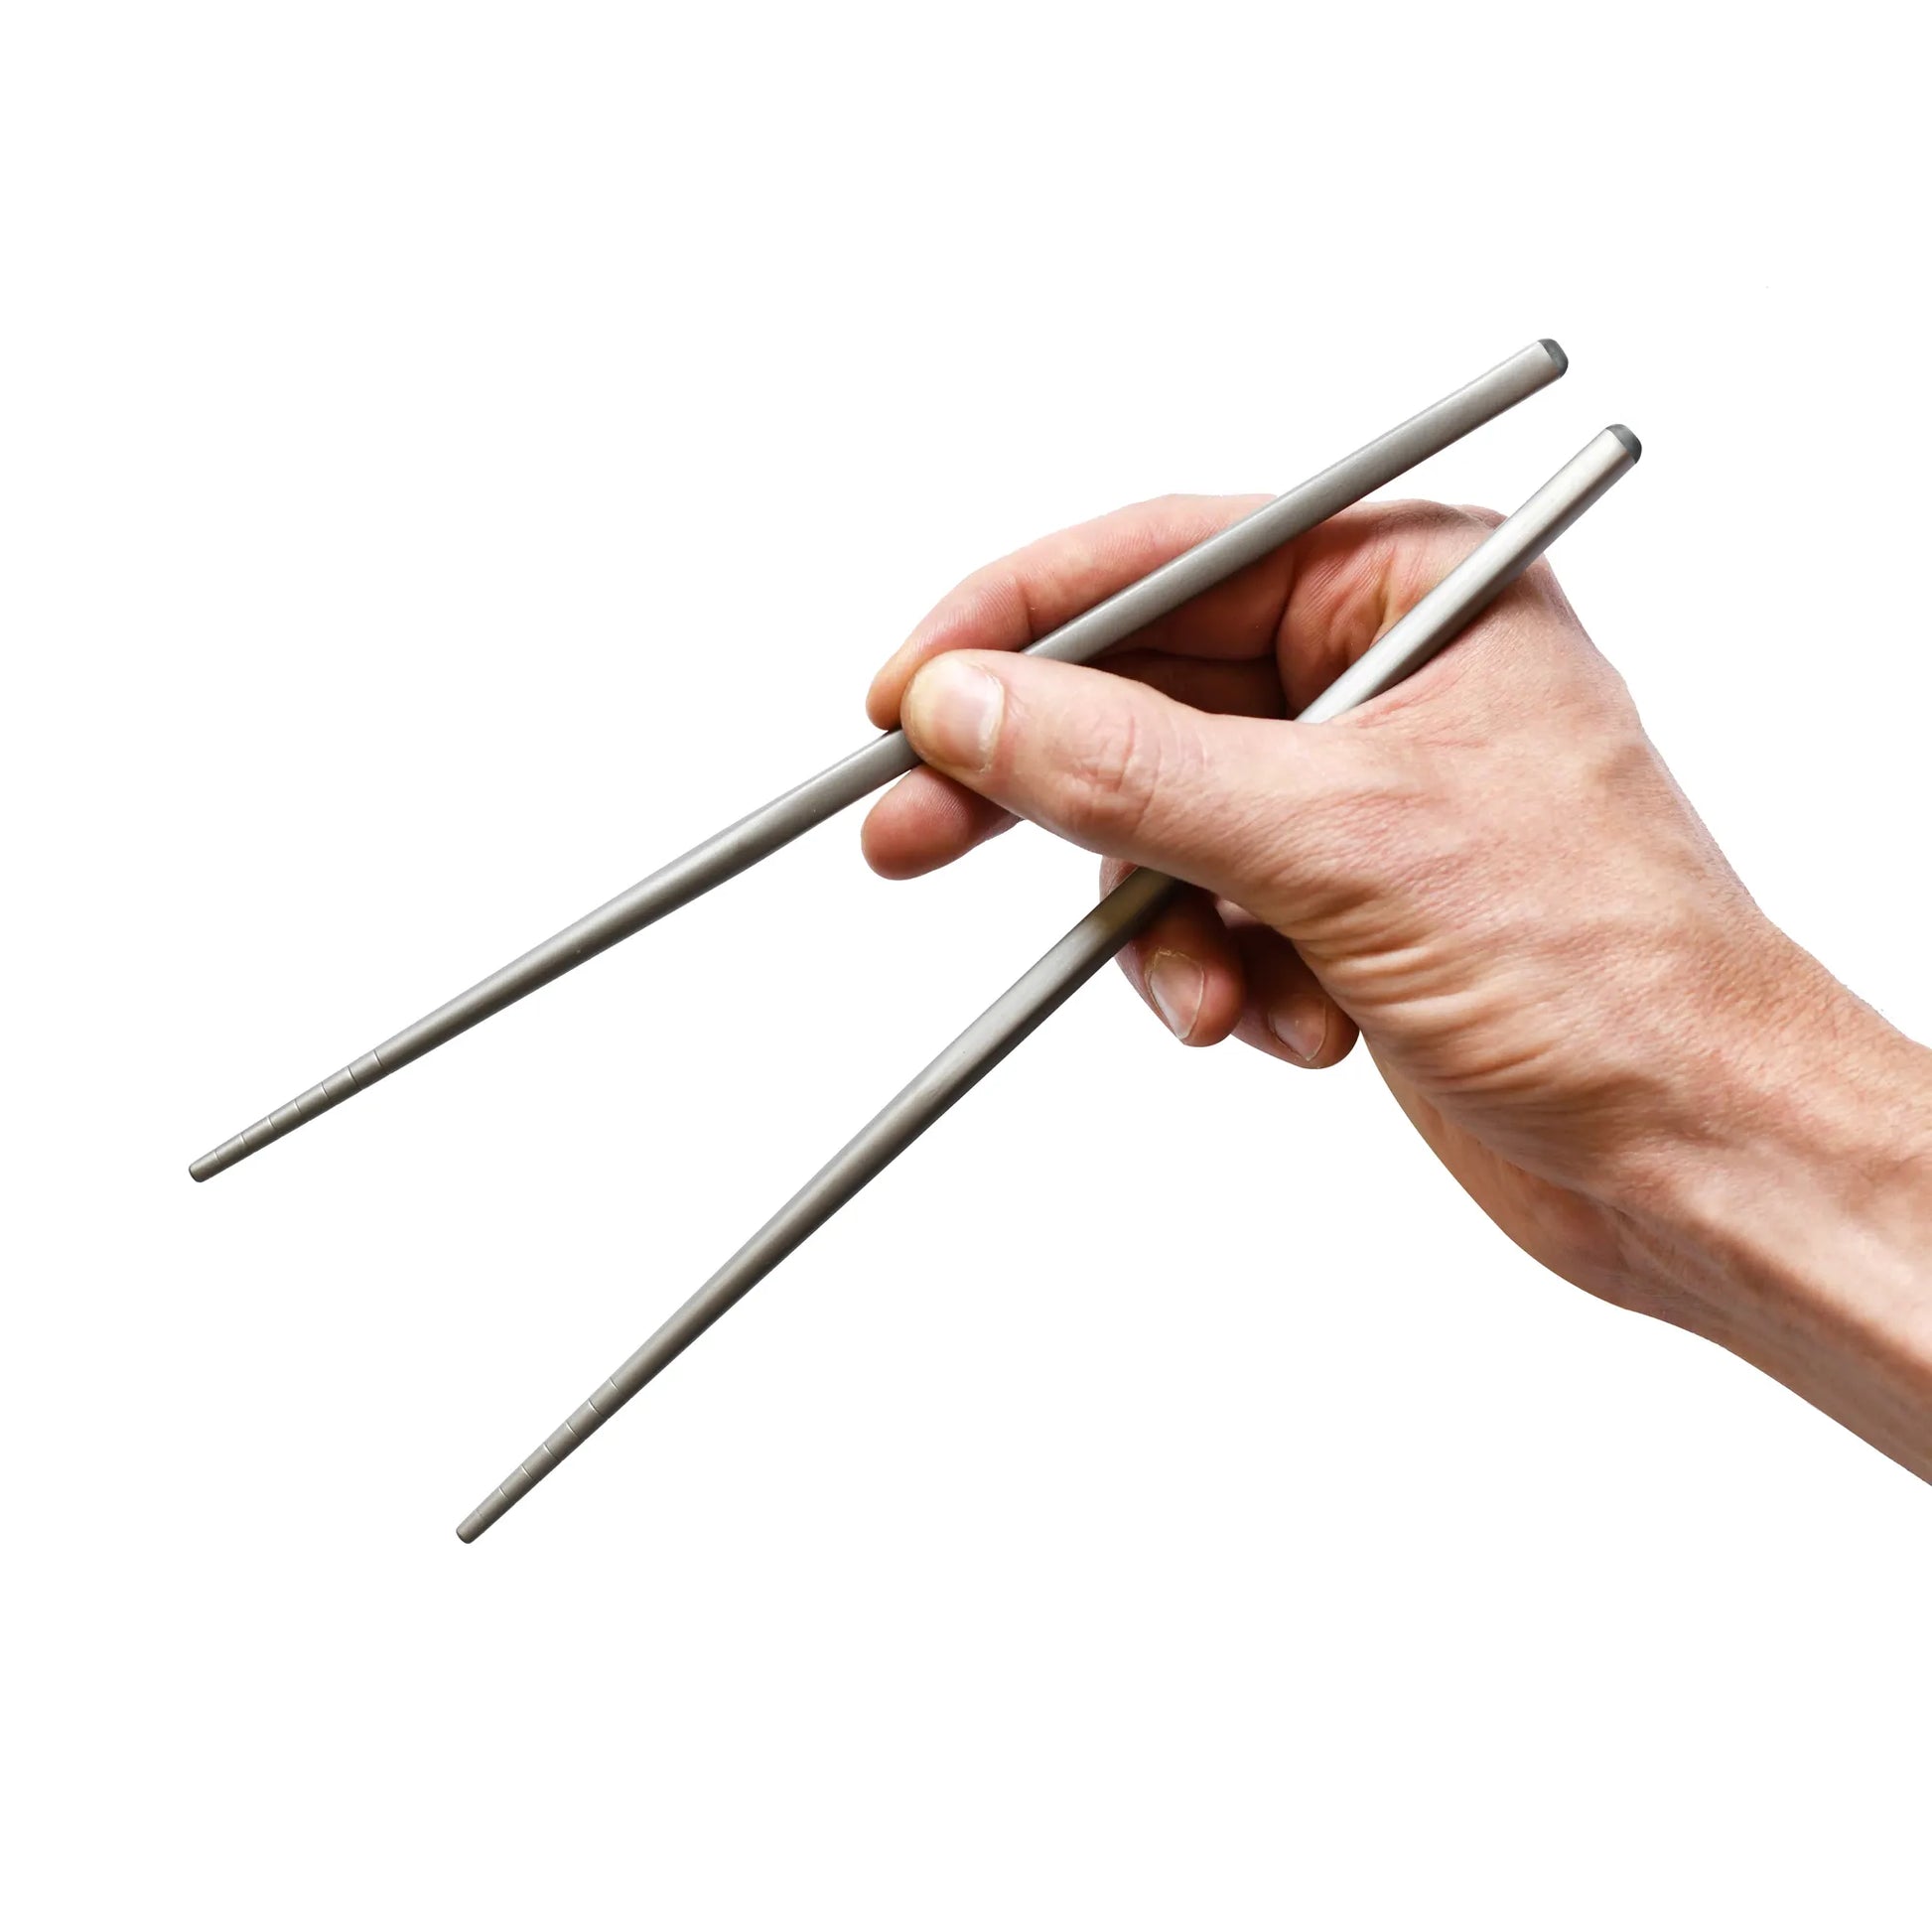 Hand holding titanium chopsticks.